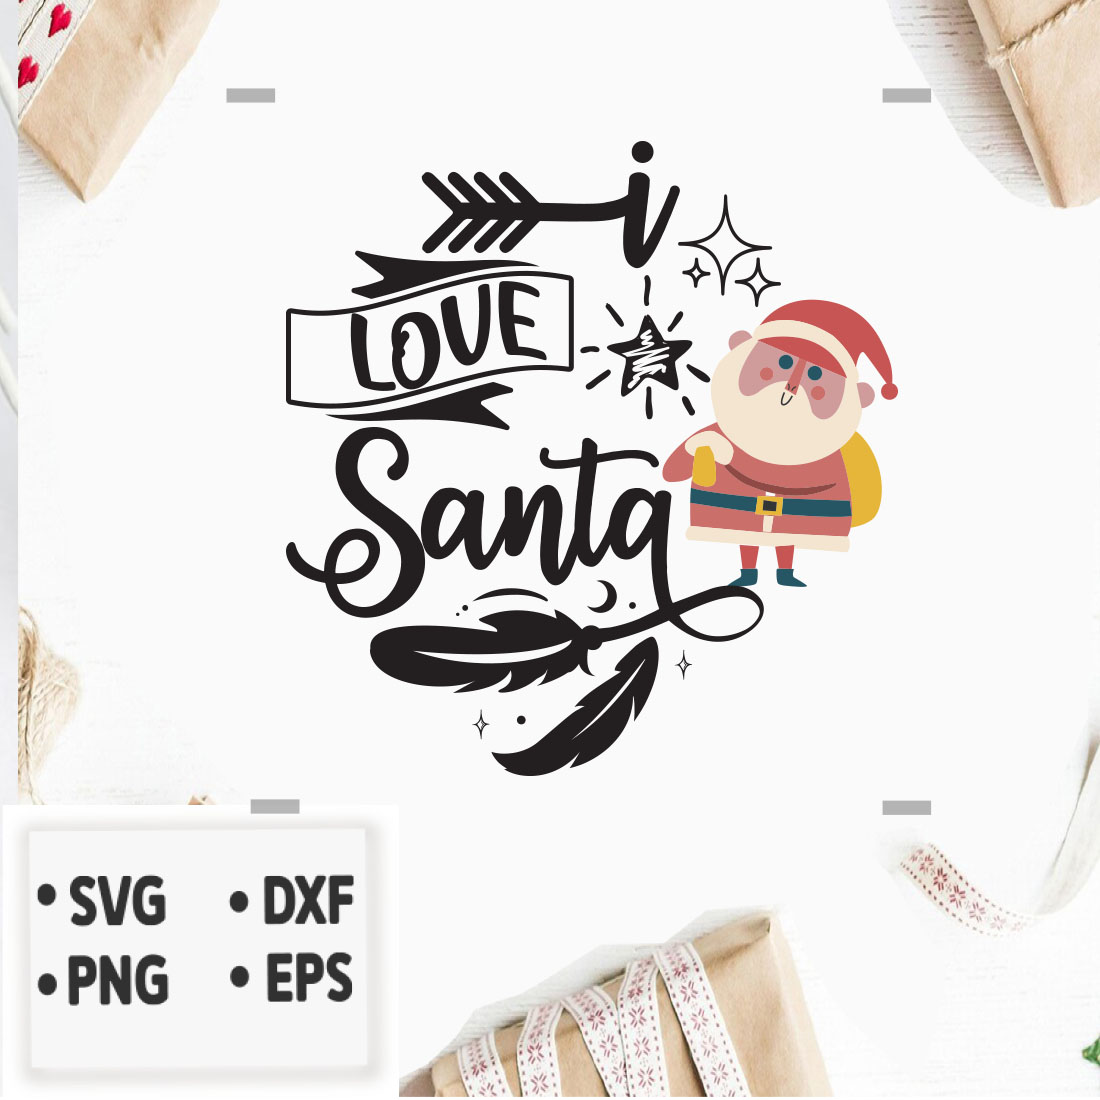 Image with charming inscription I love Santa.